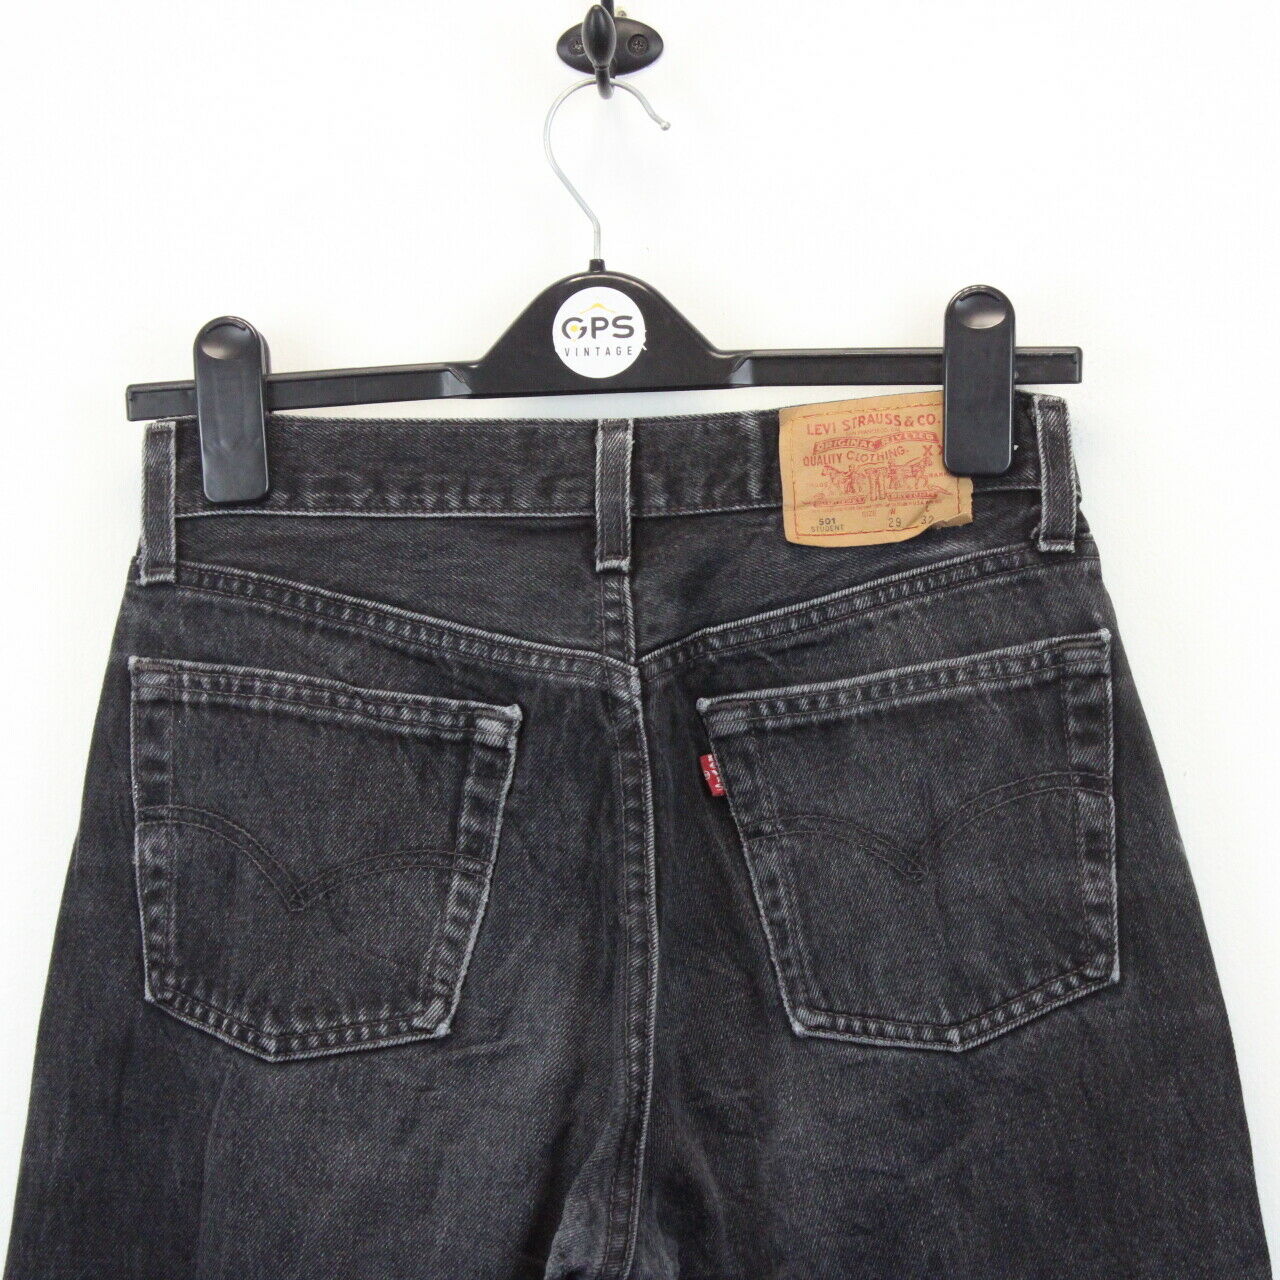 Womens LEVIS 501 Student Jeans Black Charcoal | W29 L32